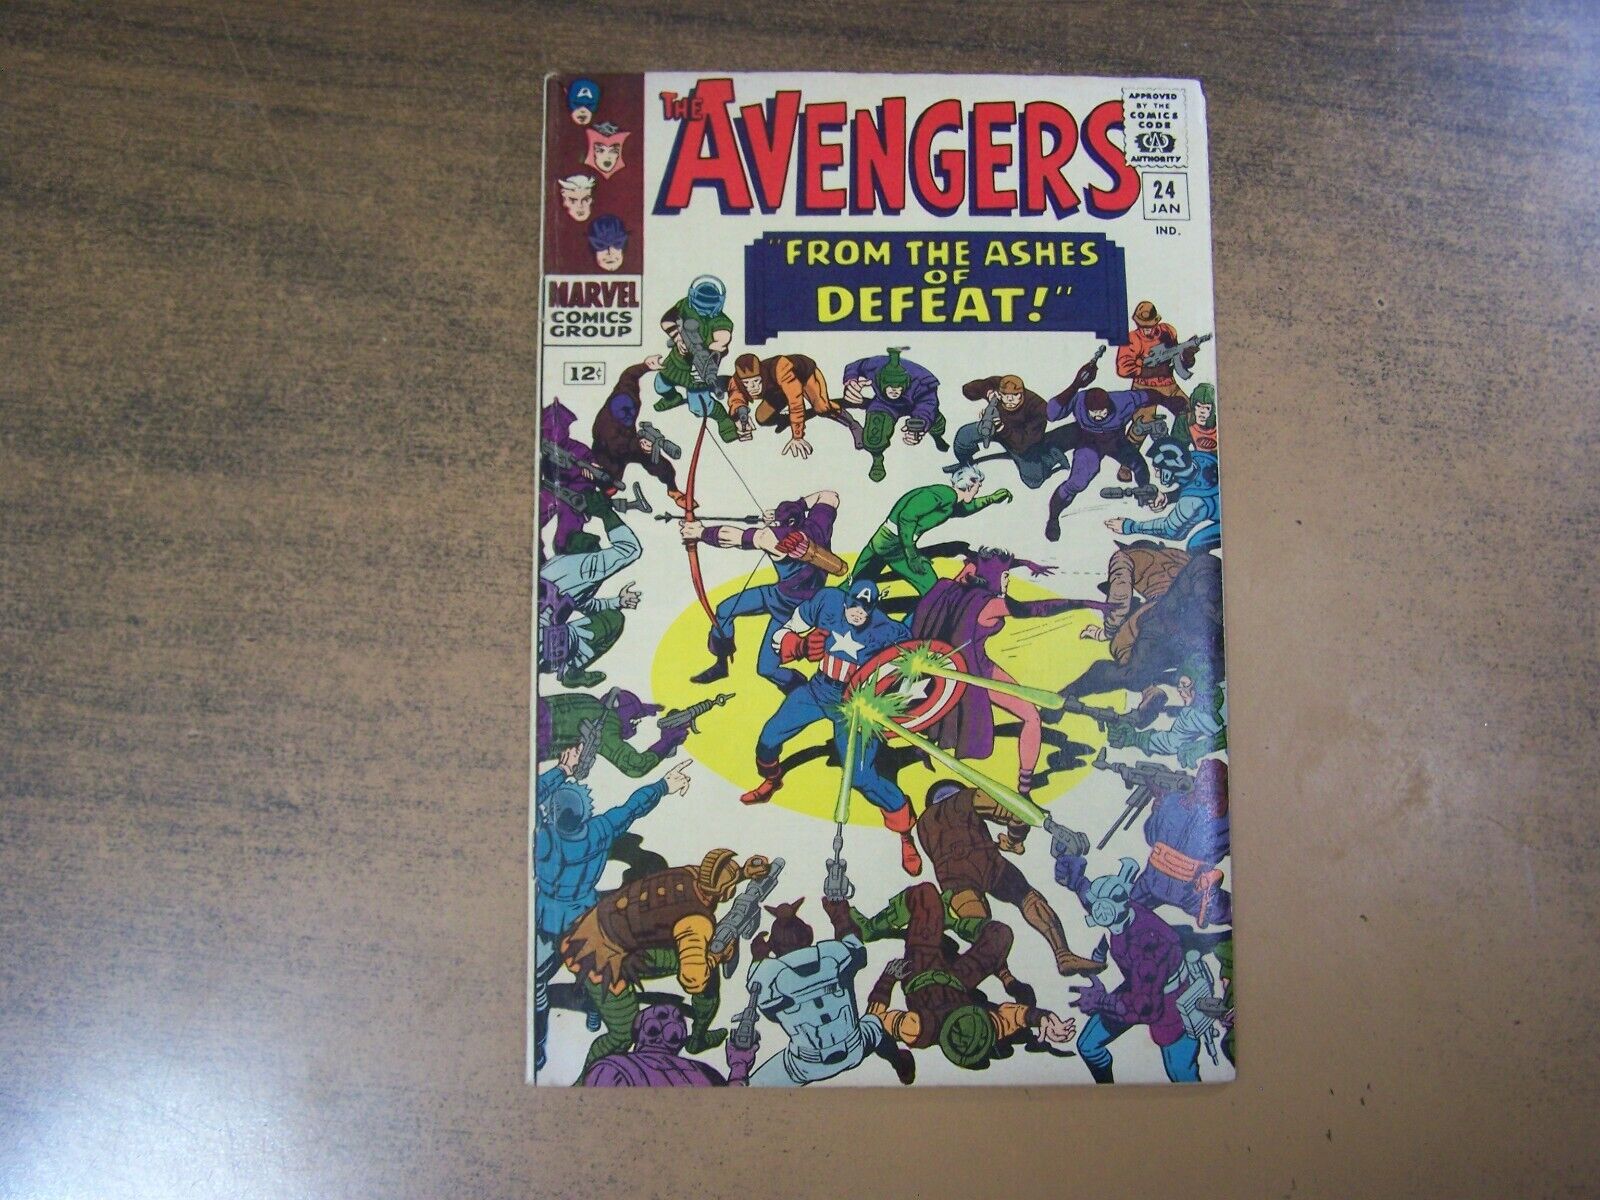 The Avengers #24